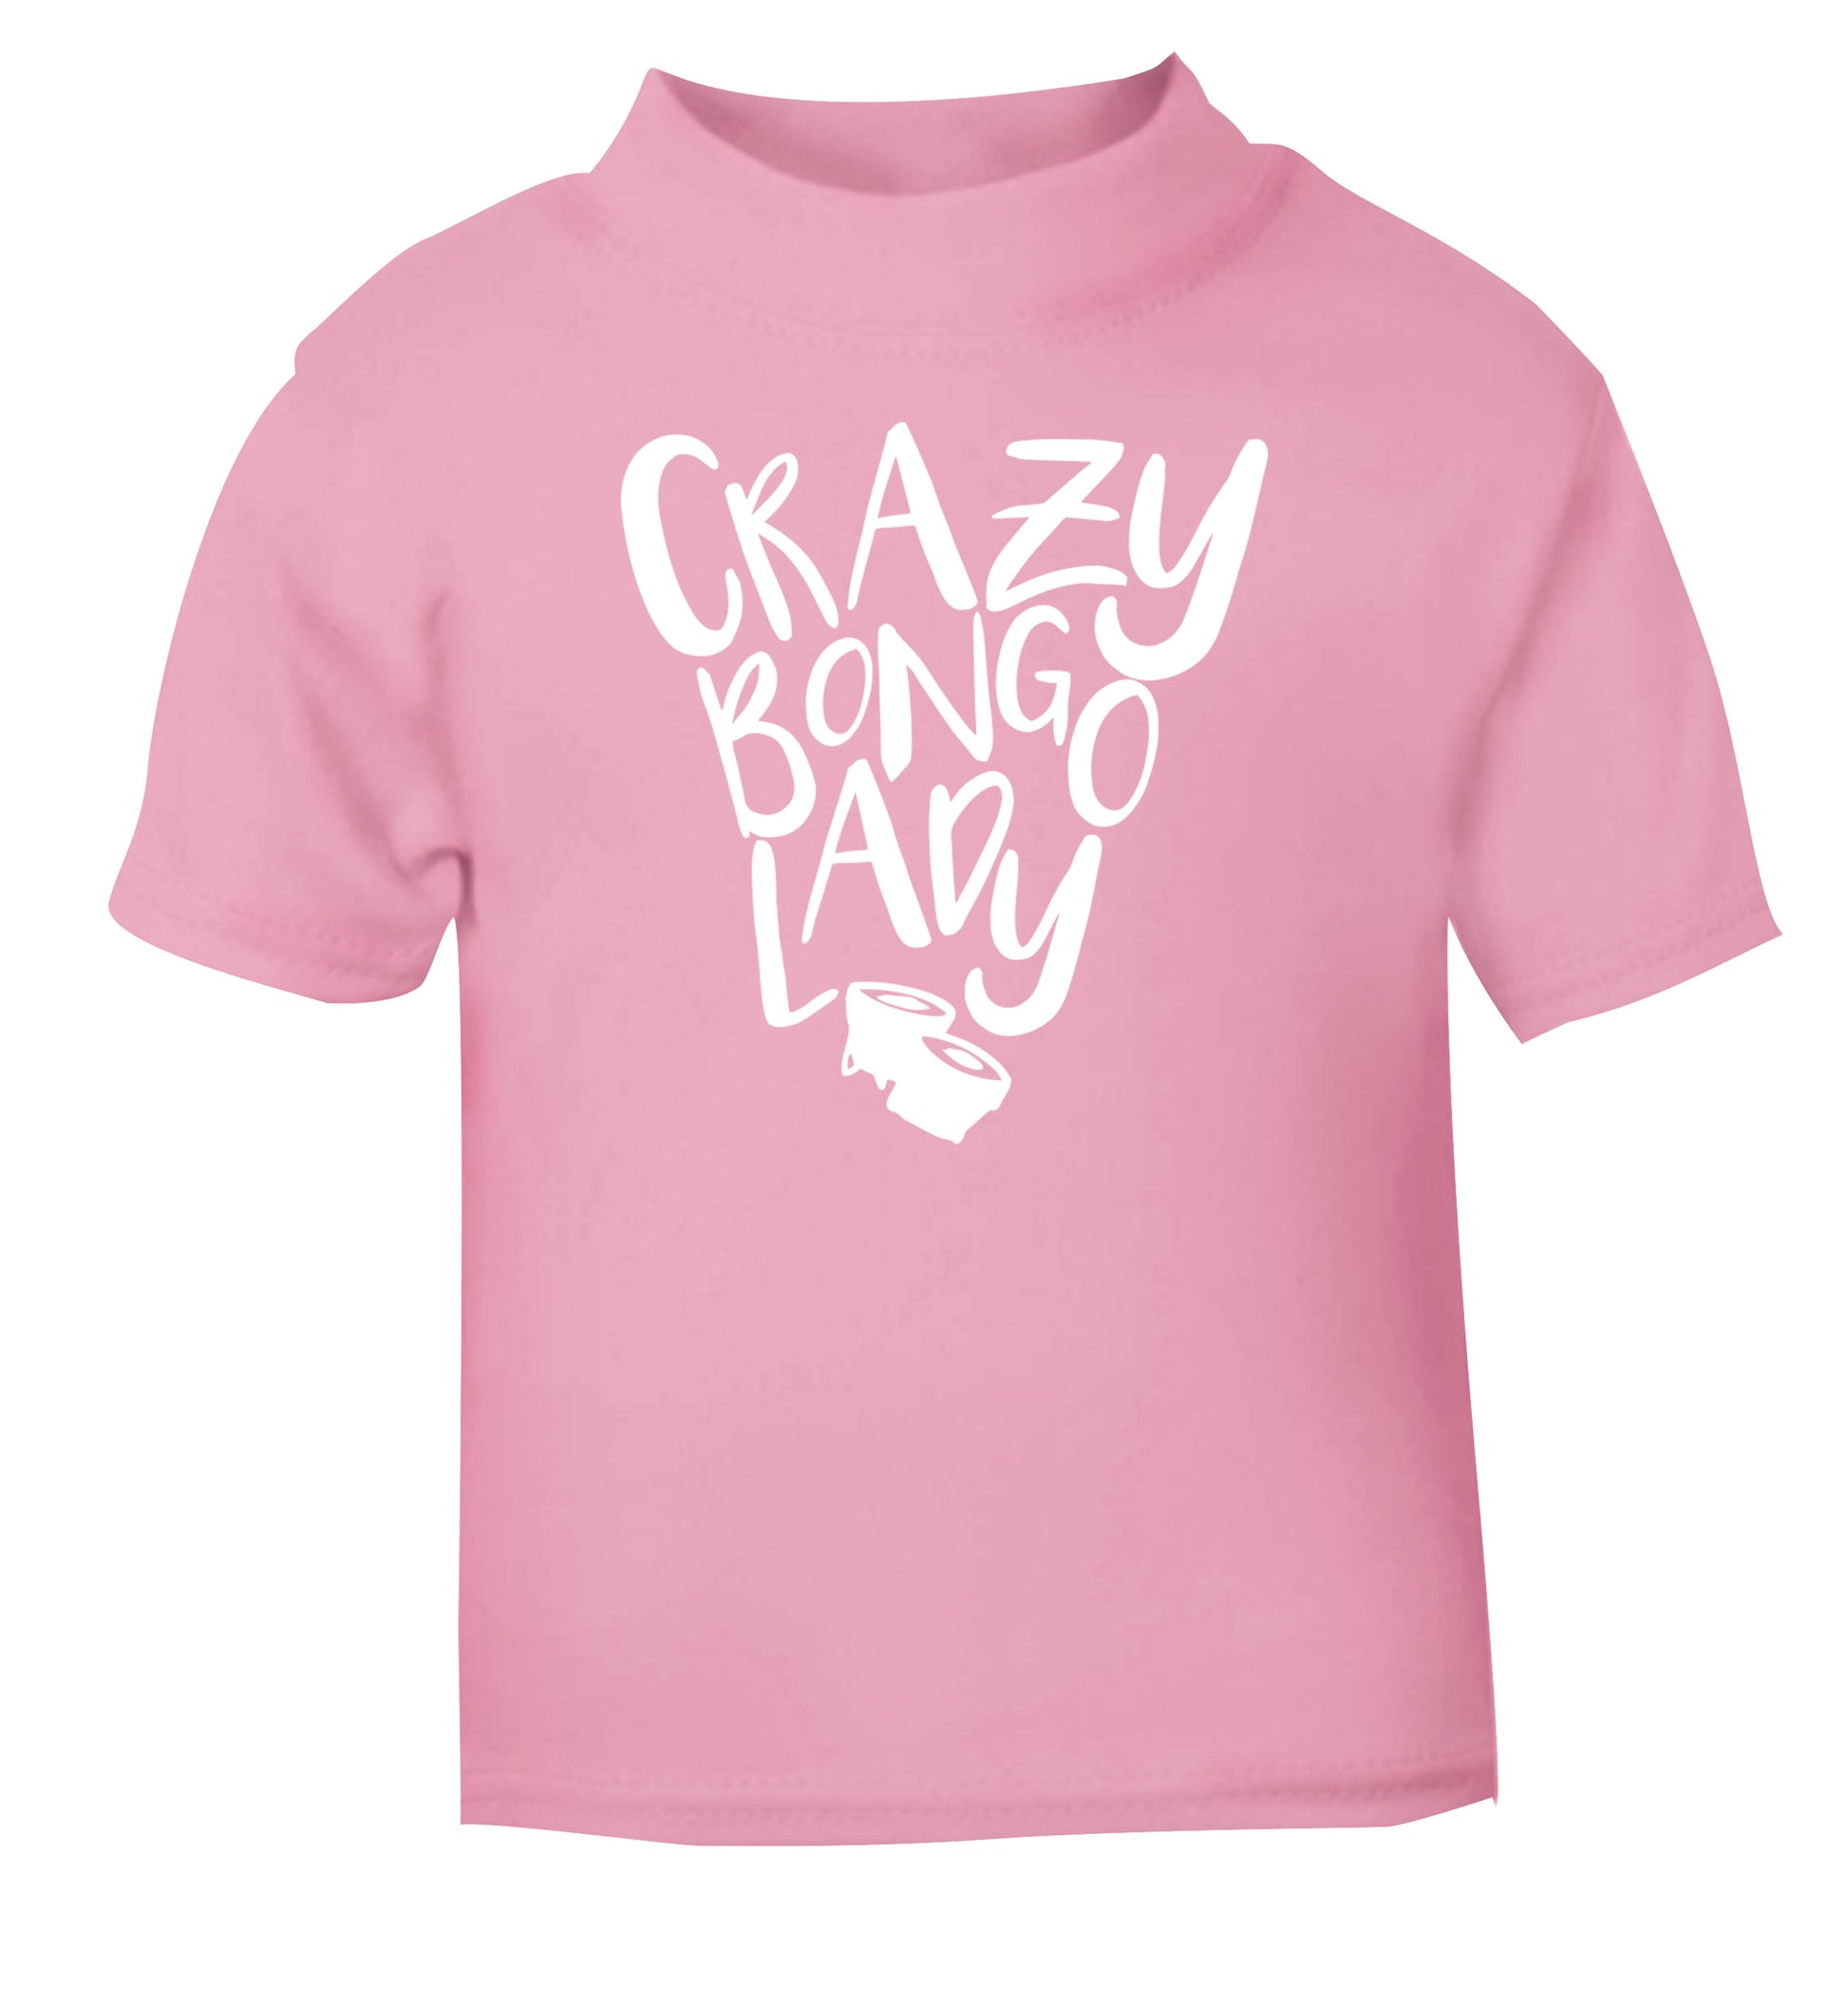 Crazy bongo lady light pink Baby Toddler Tshirt 2 Years